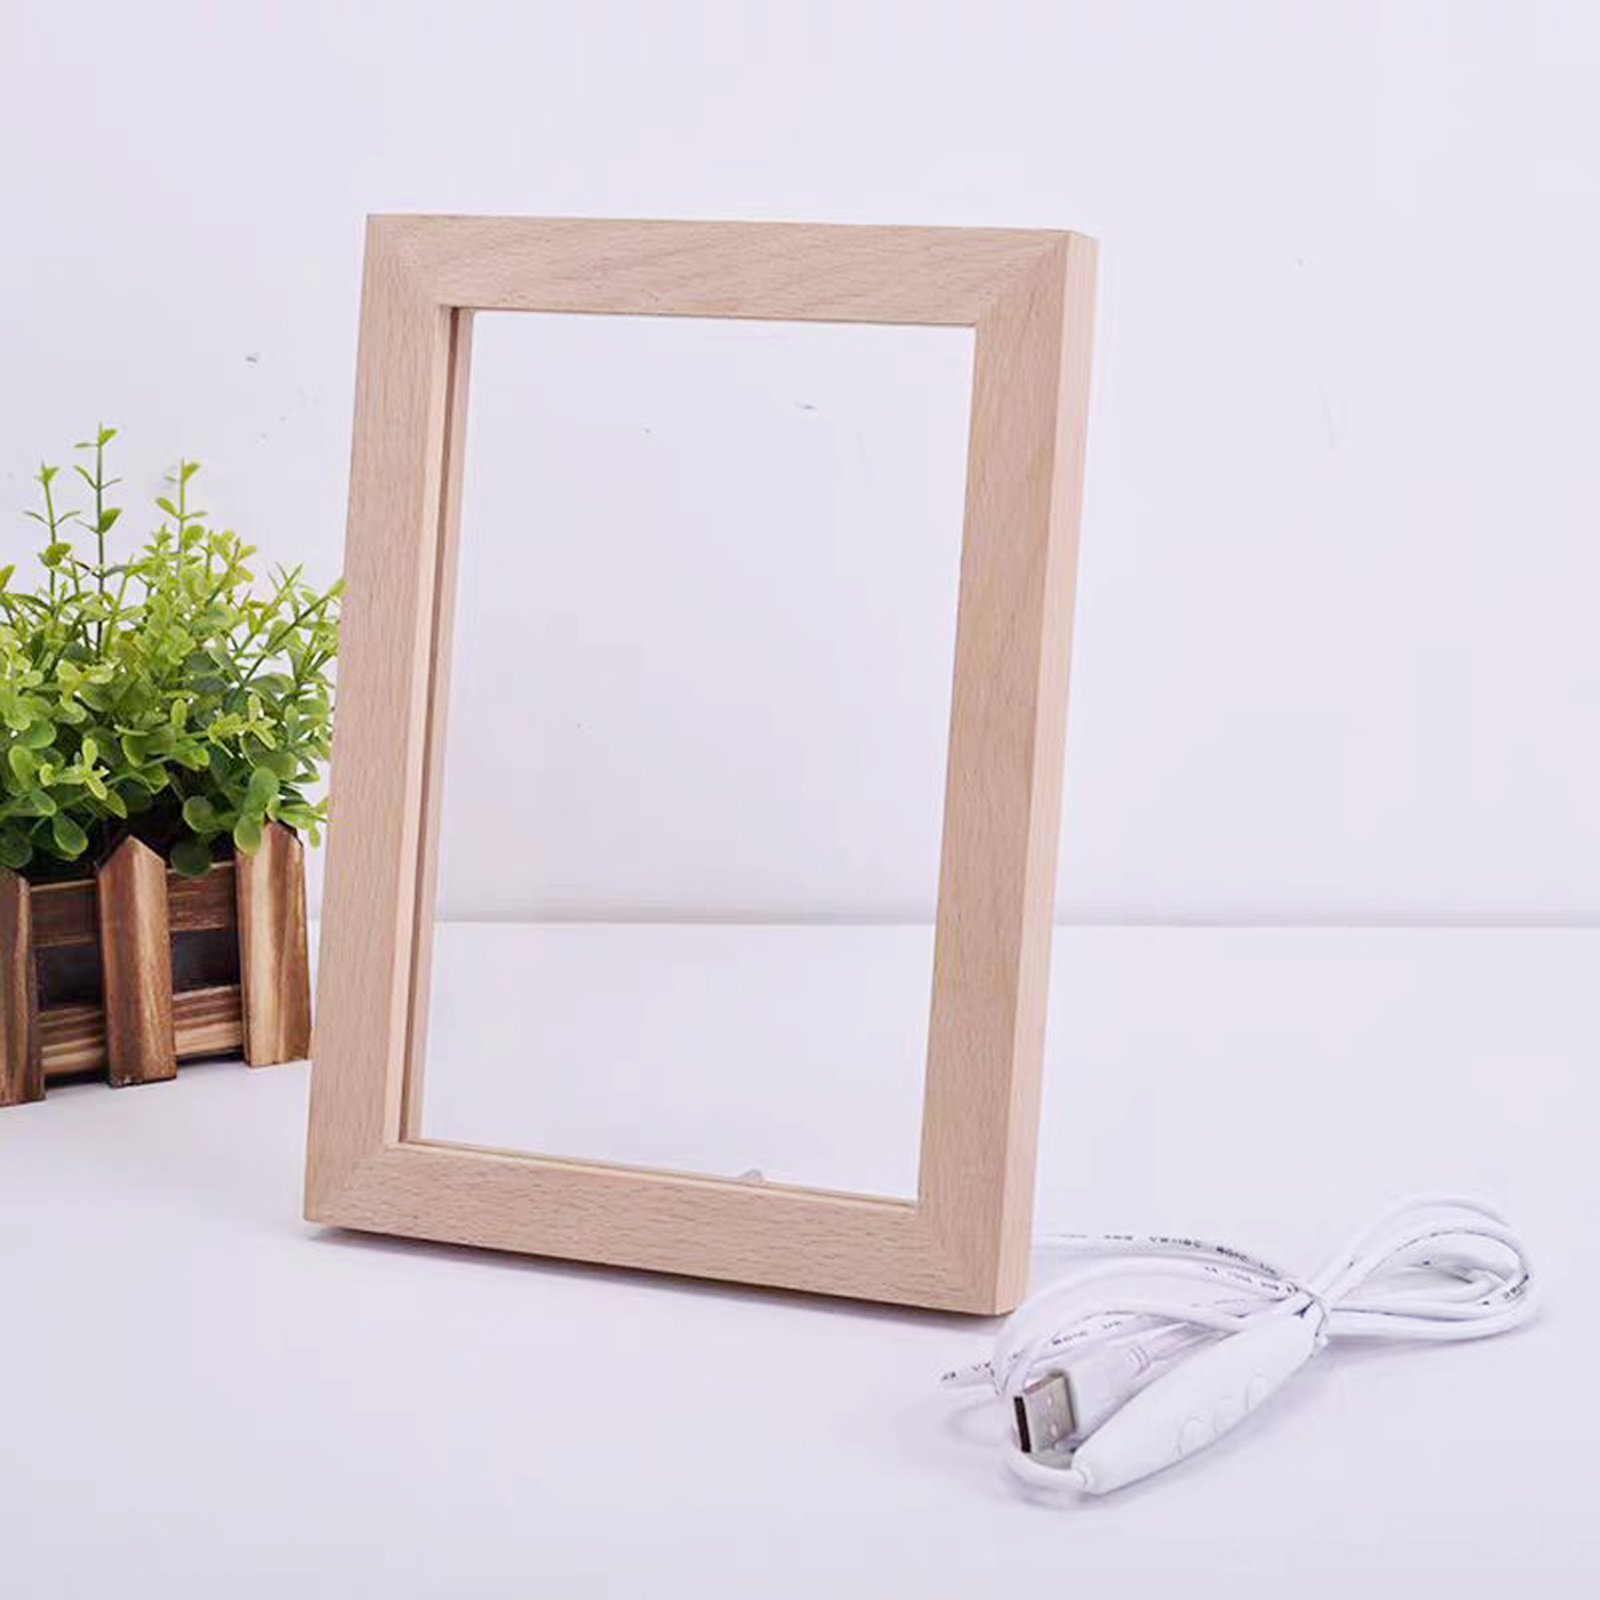 2sets/pack CALCA Wood Photo Frame 3D LED Photo Frame kit (Wooden photo frame + blank acrylic board) DIY gift, Wholesale